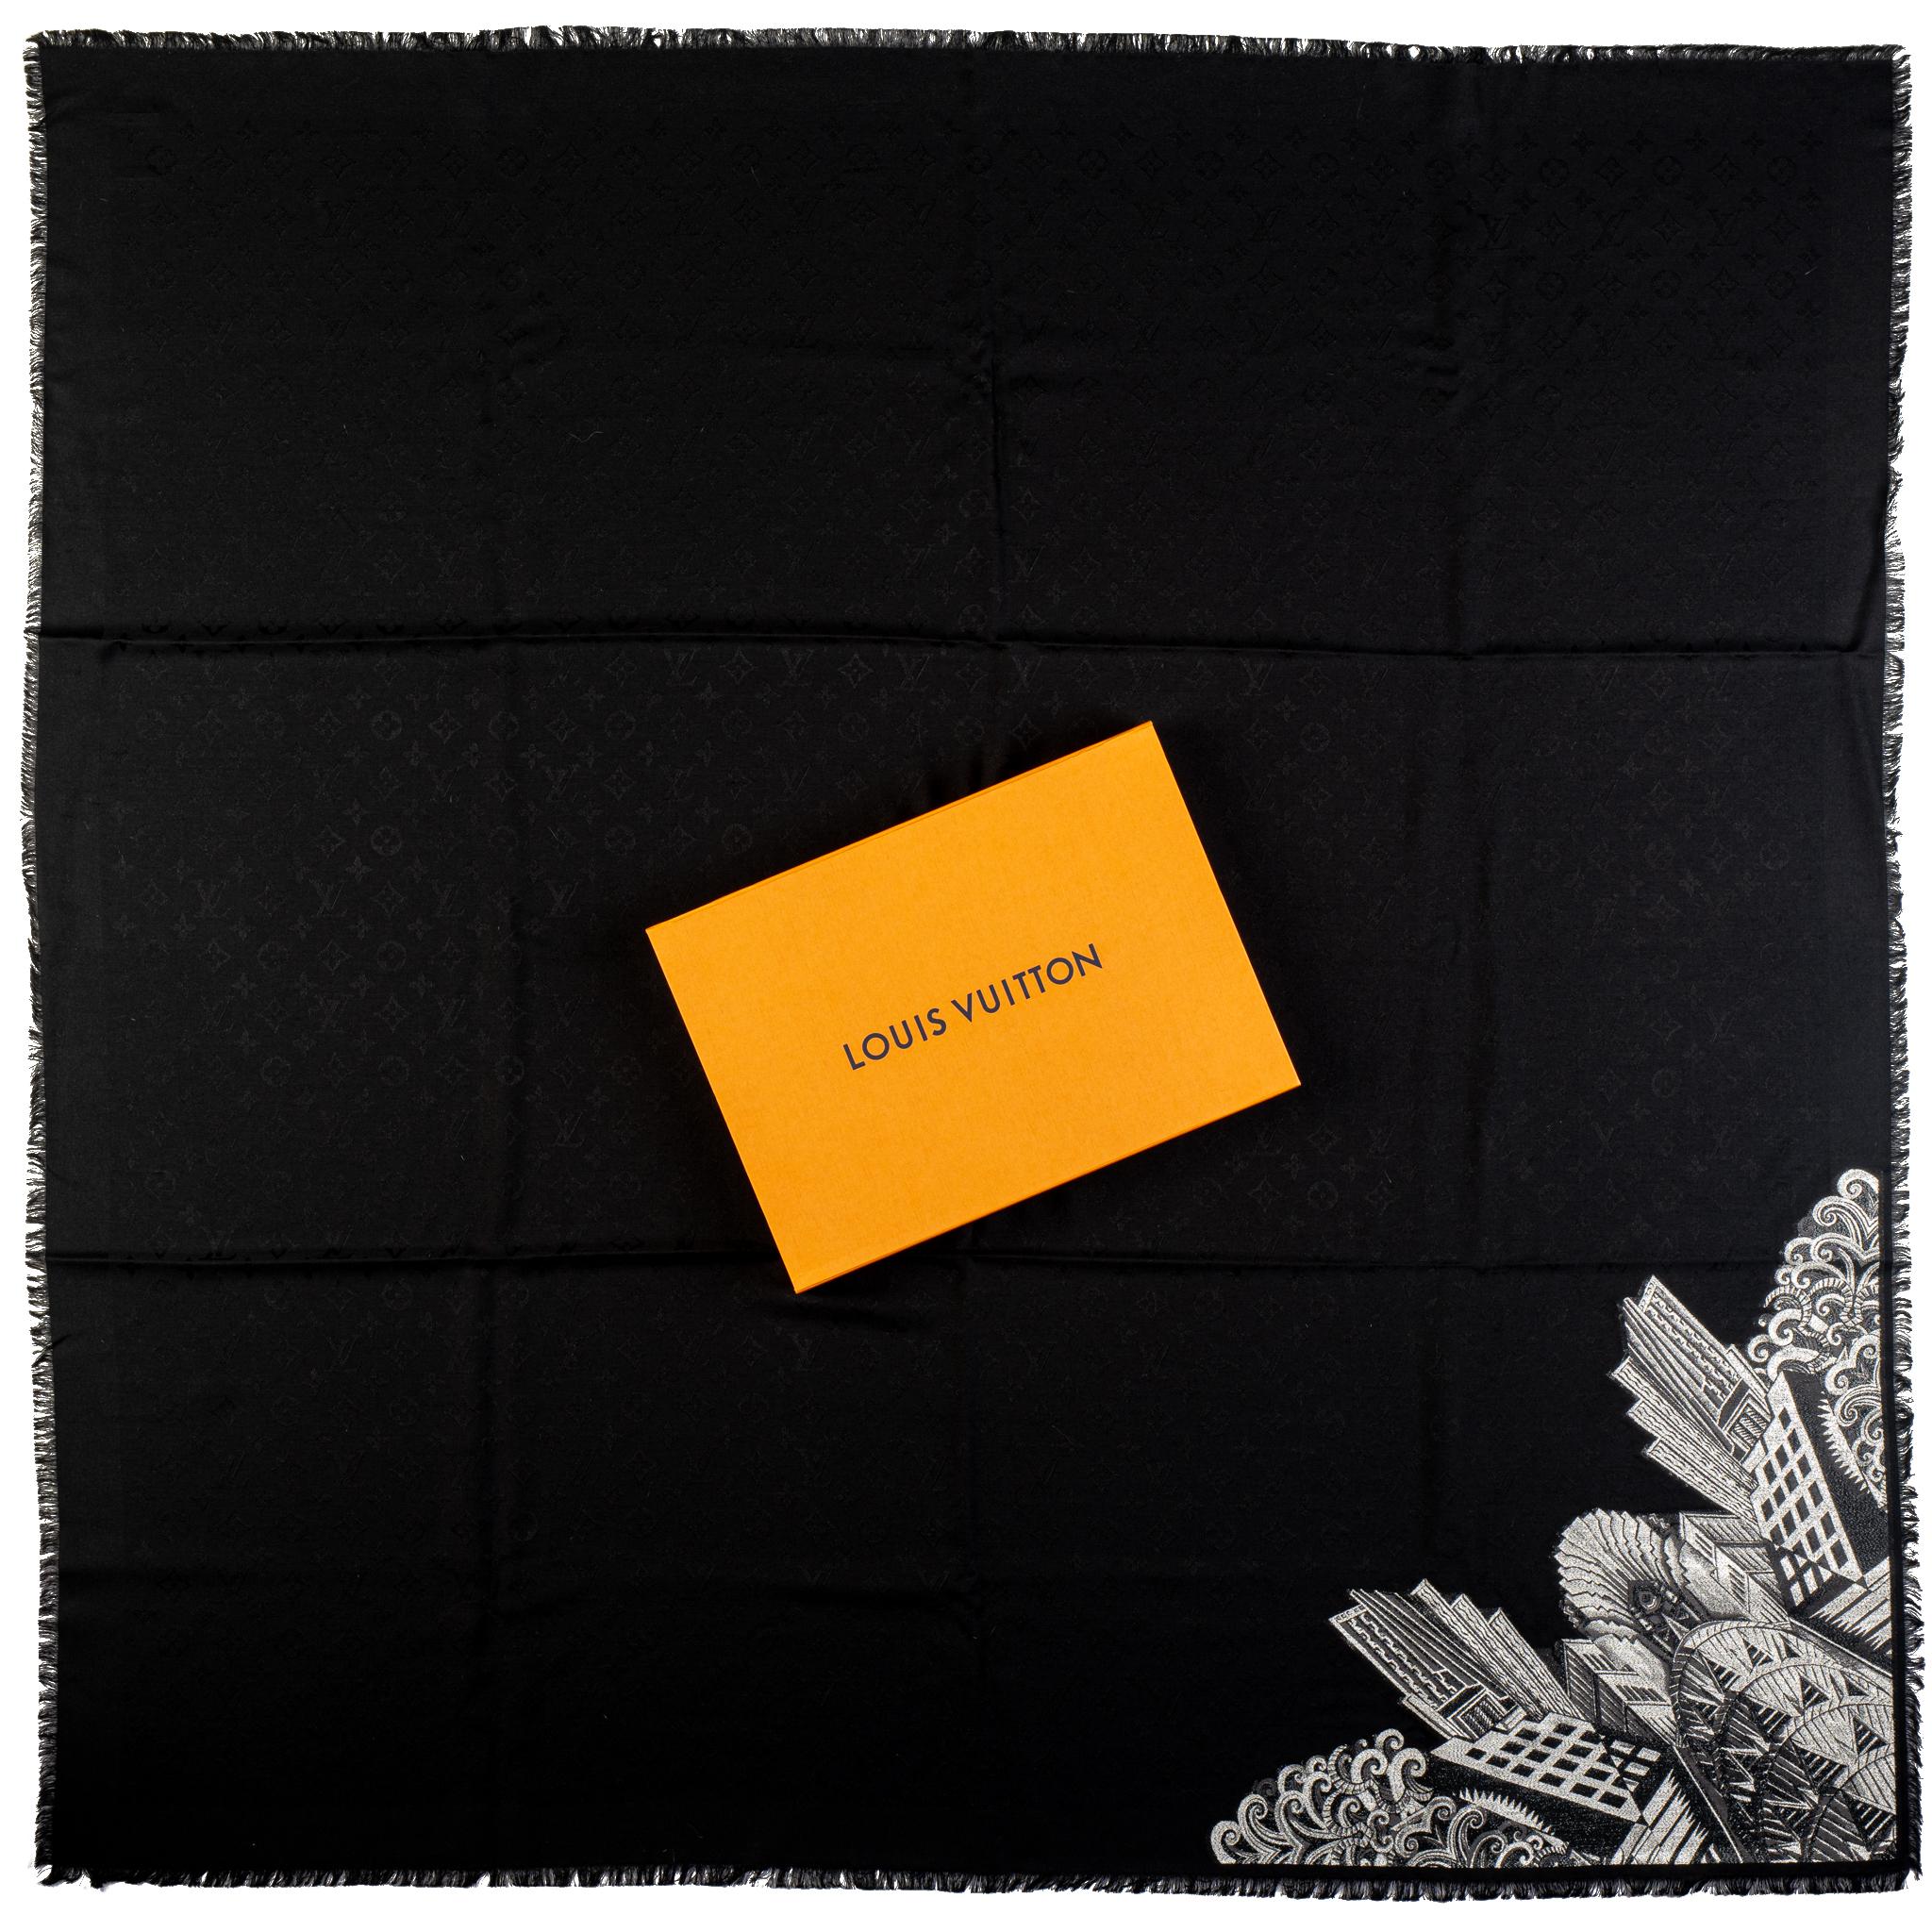 Vuitton limited edition brand new black large shawl. New York Skyscraper design. Silk, wool combination. Comes with original box.